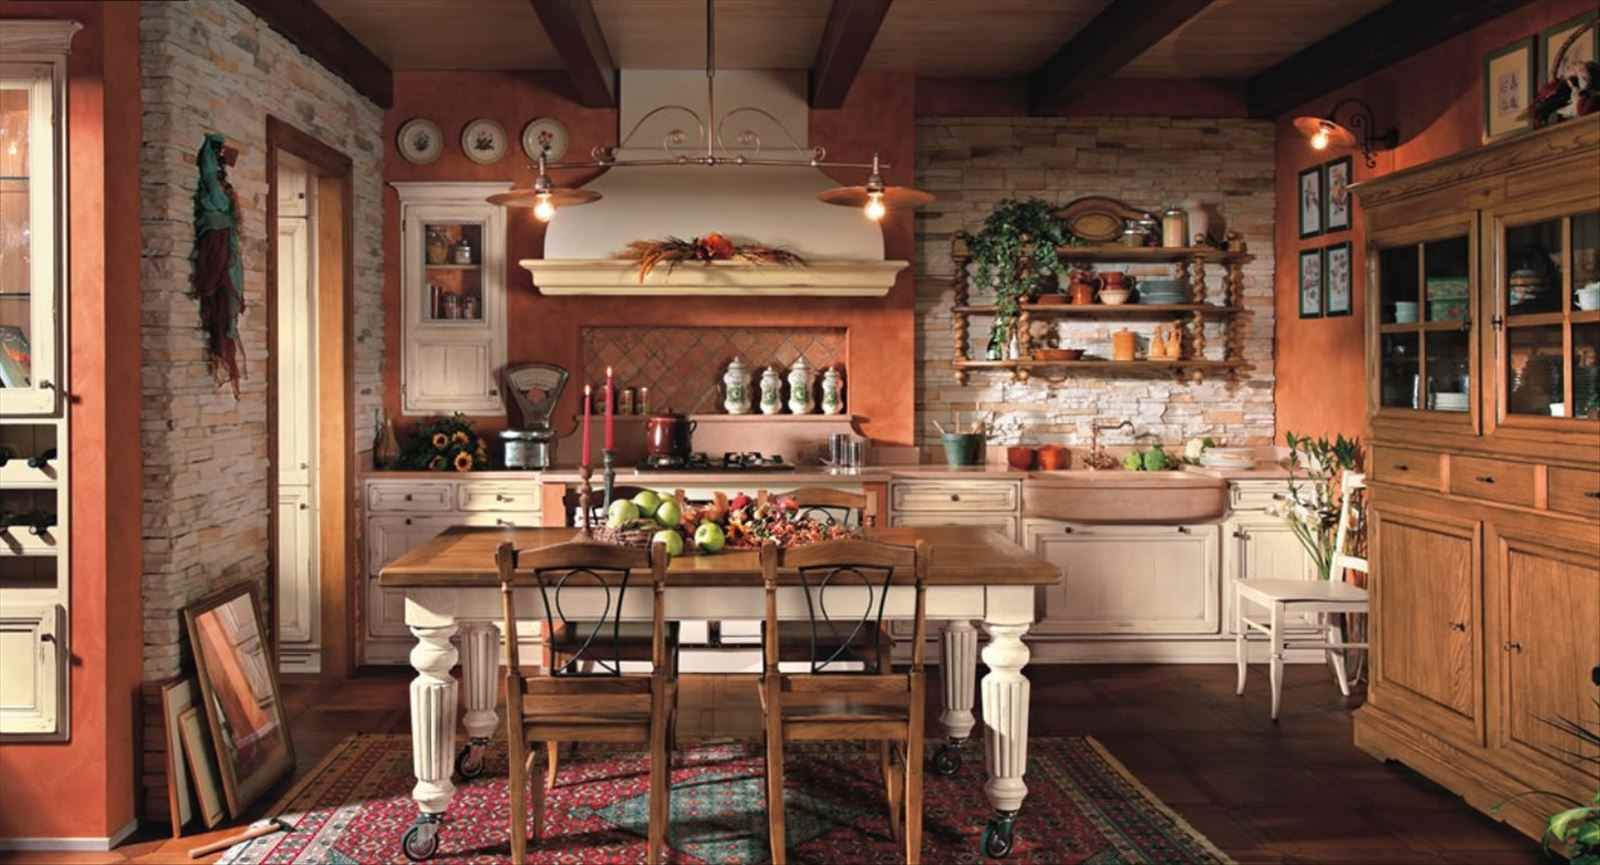 l'idea di una bella cucina dal design rustico